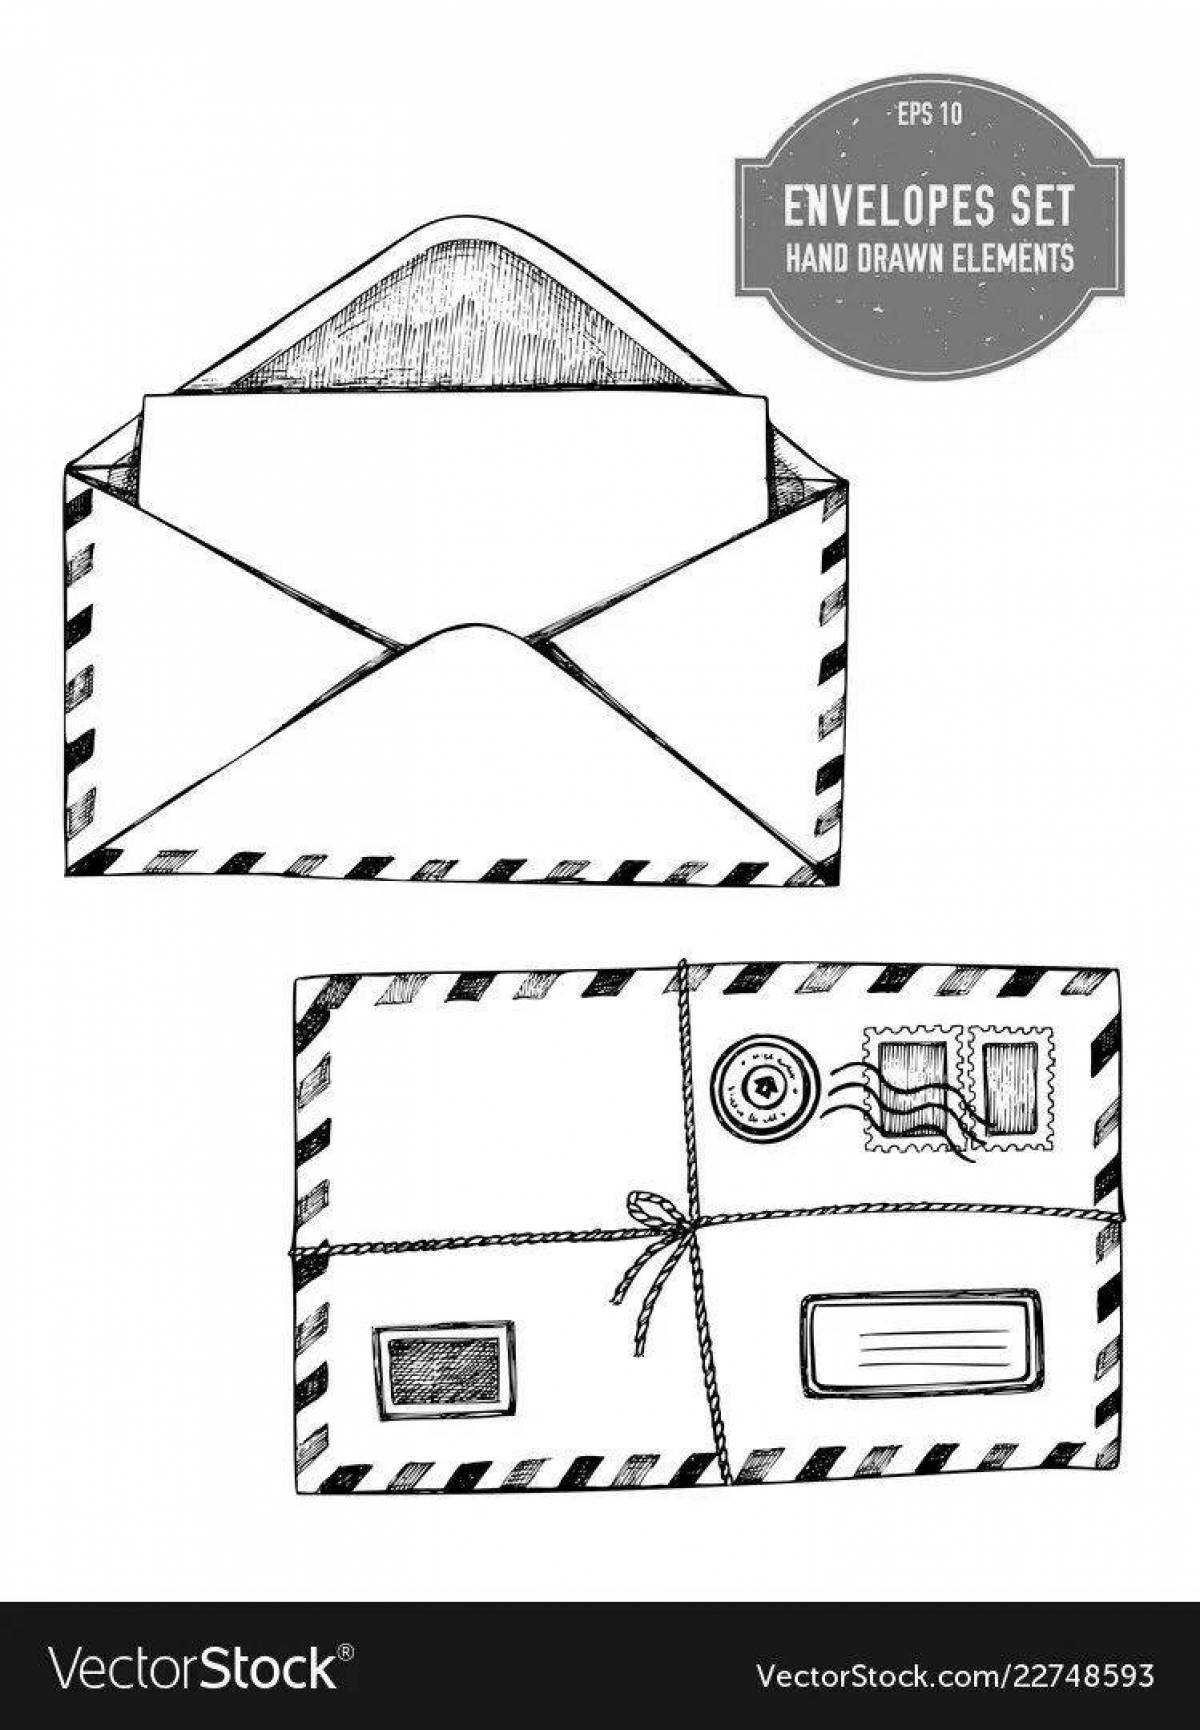 Innovative cool envelope templates